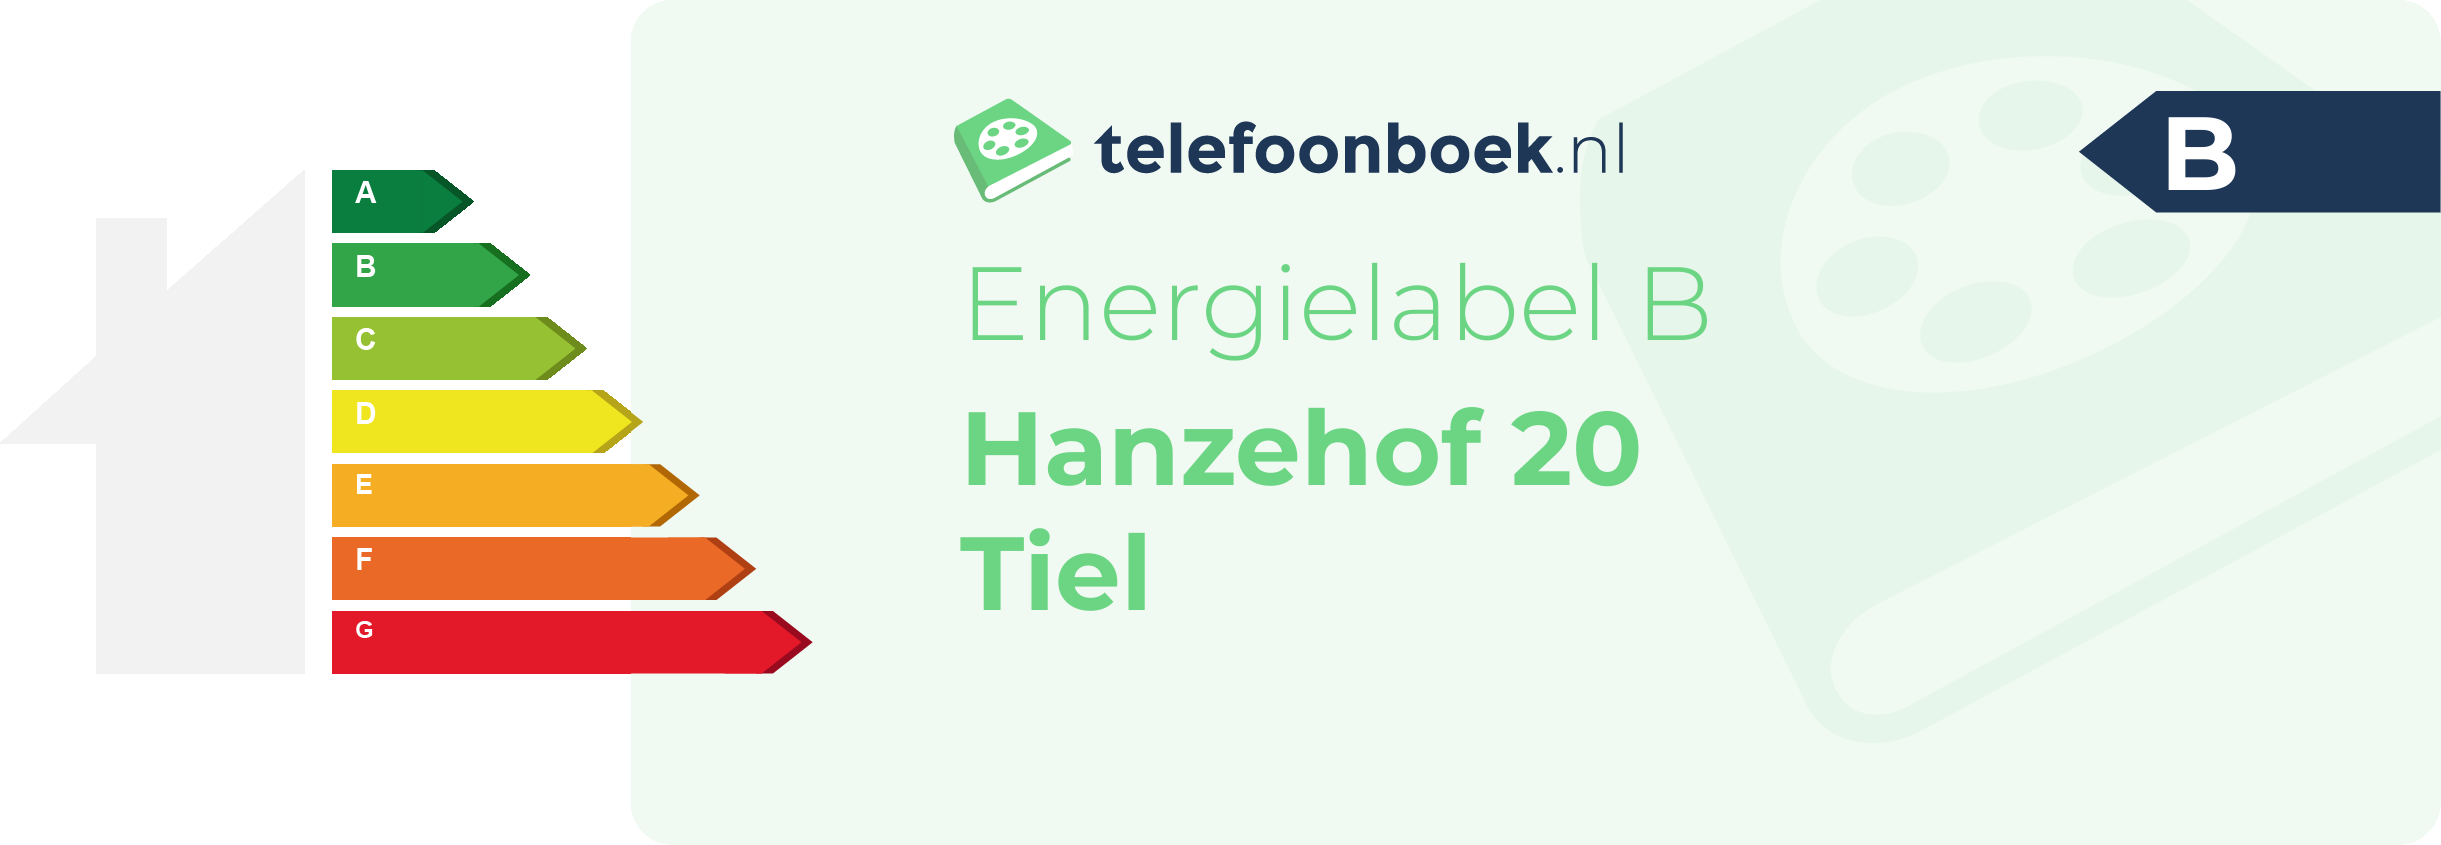 Energielabel Hanzehof 20 Tiel